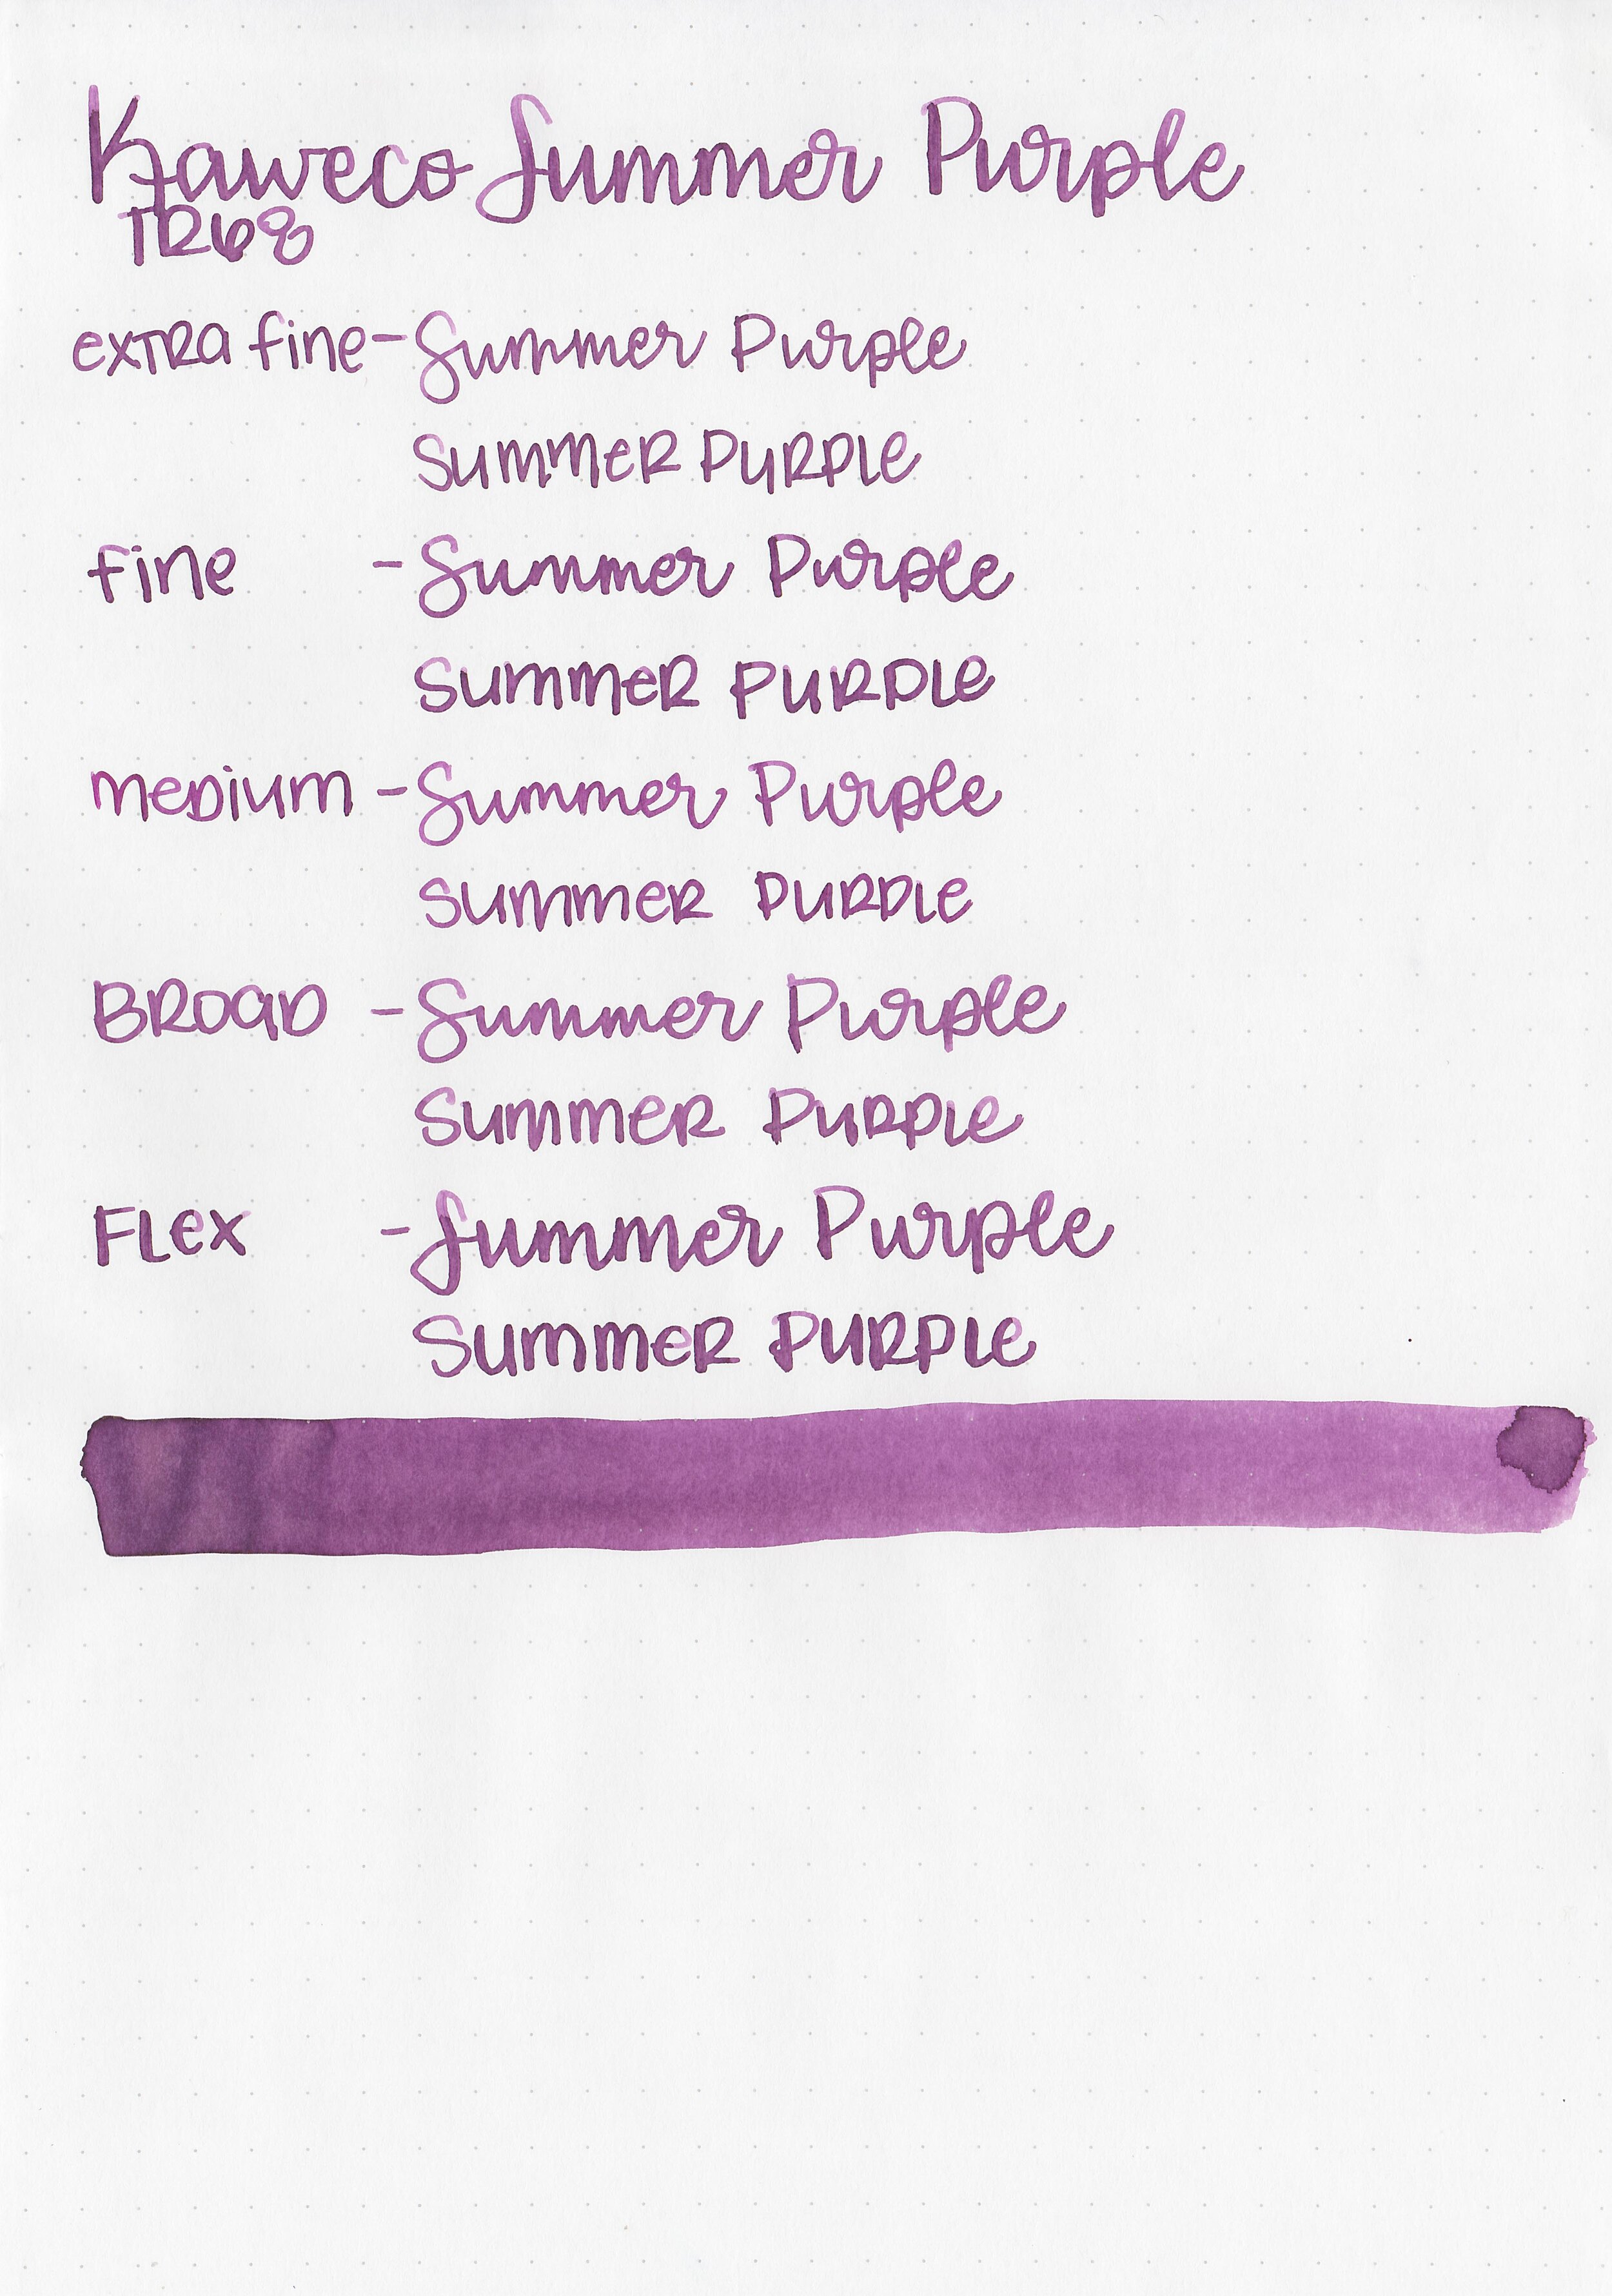 kw-summer-purple-6.jpg